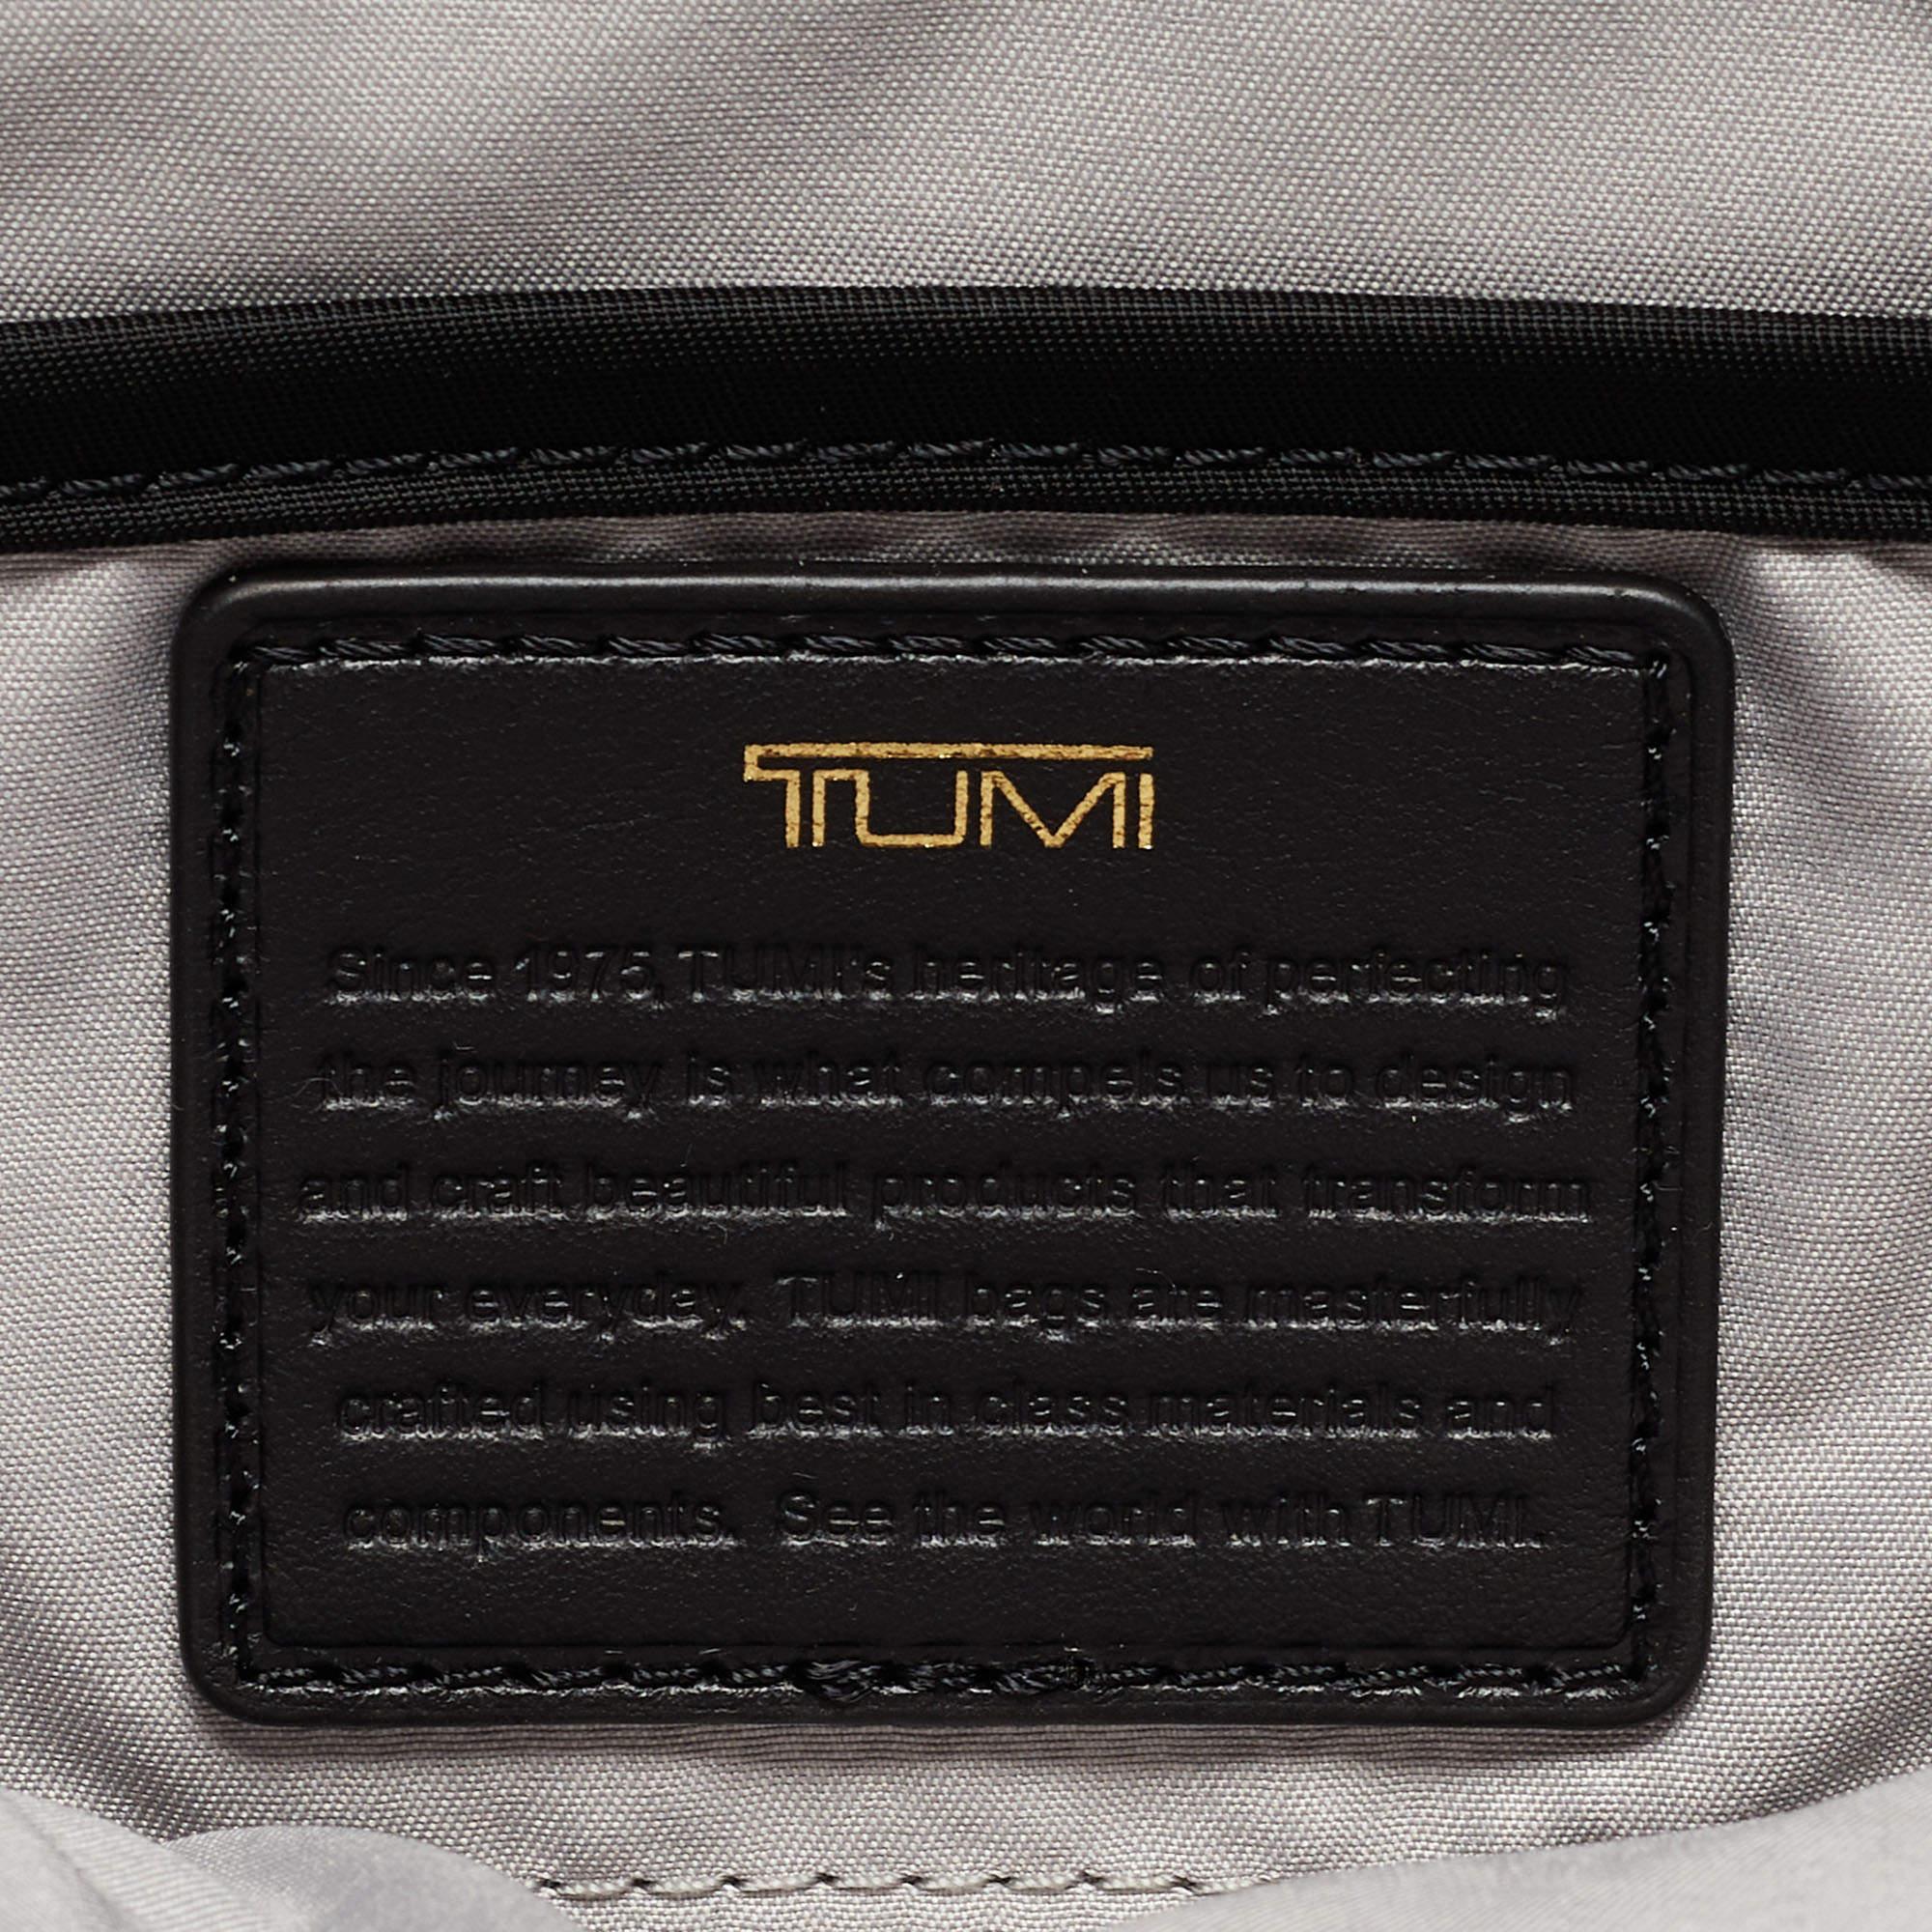 TUMI Black Nylon Compact Oxford Carry On Luggage 6